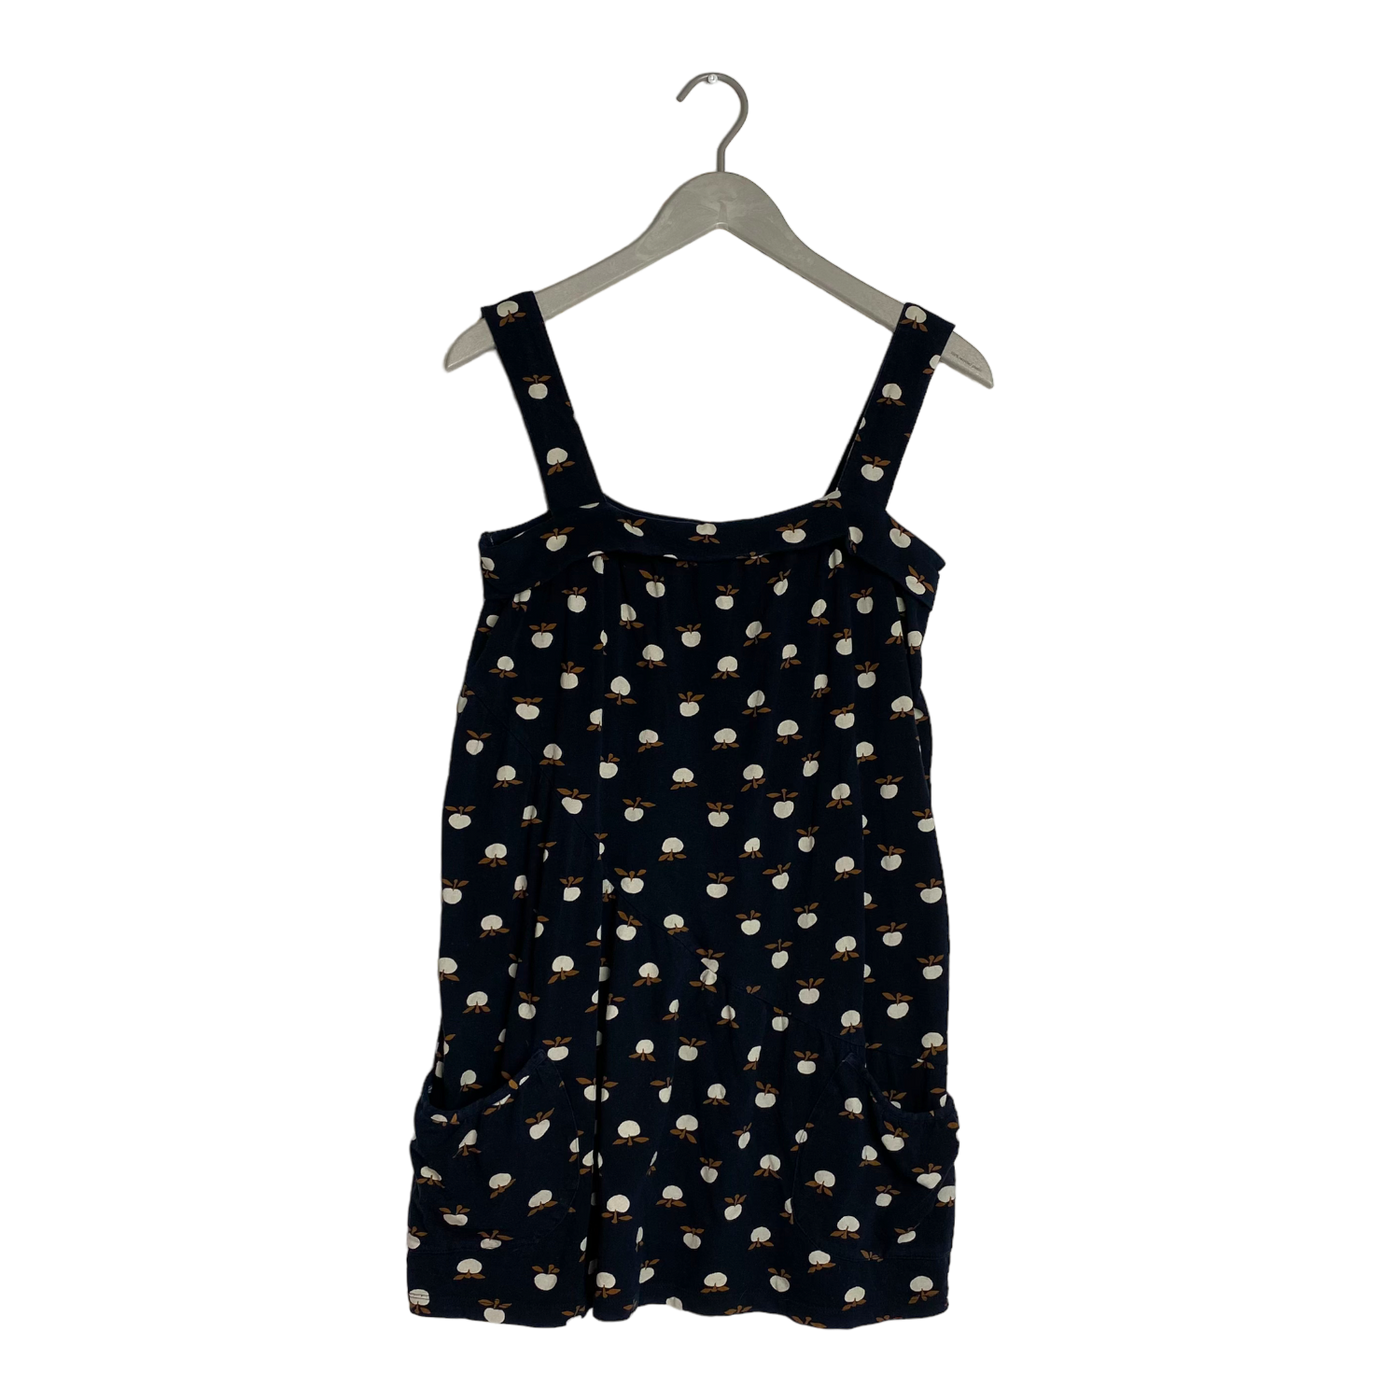 Marimekko sleeveless dress, apples | woman onesize